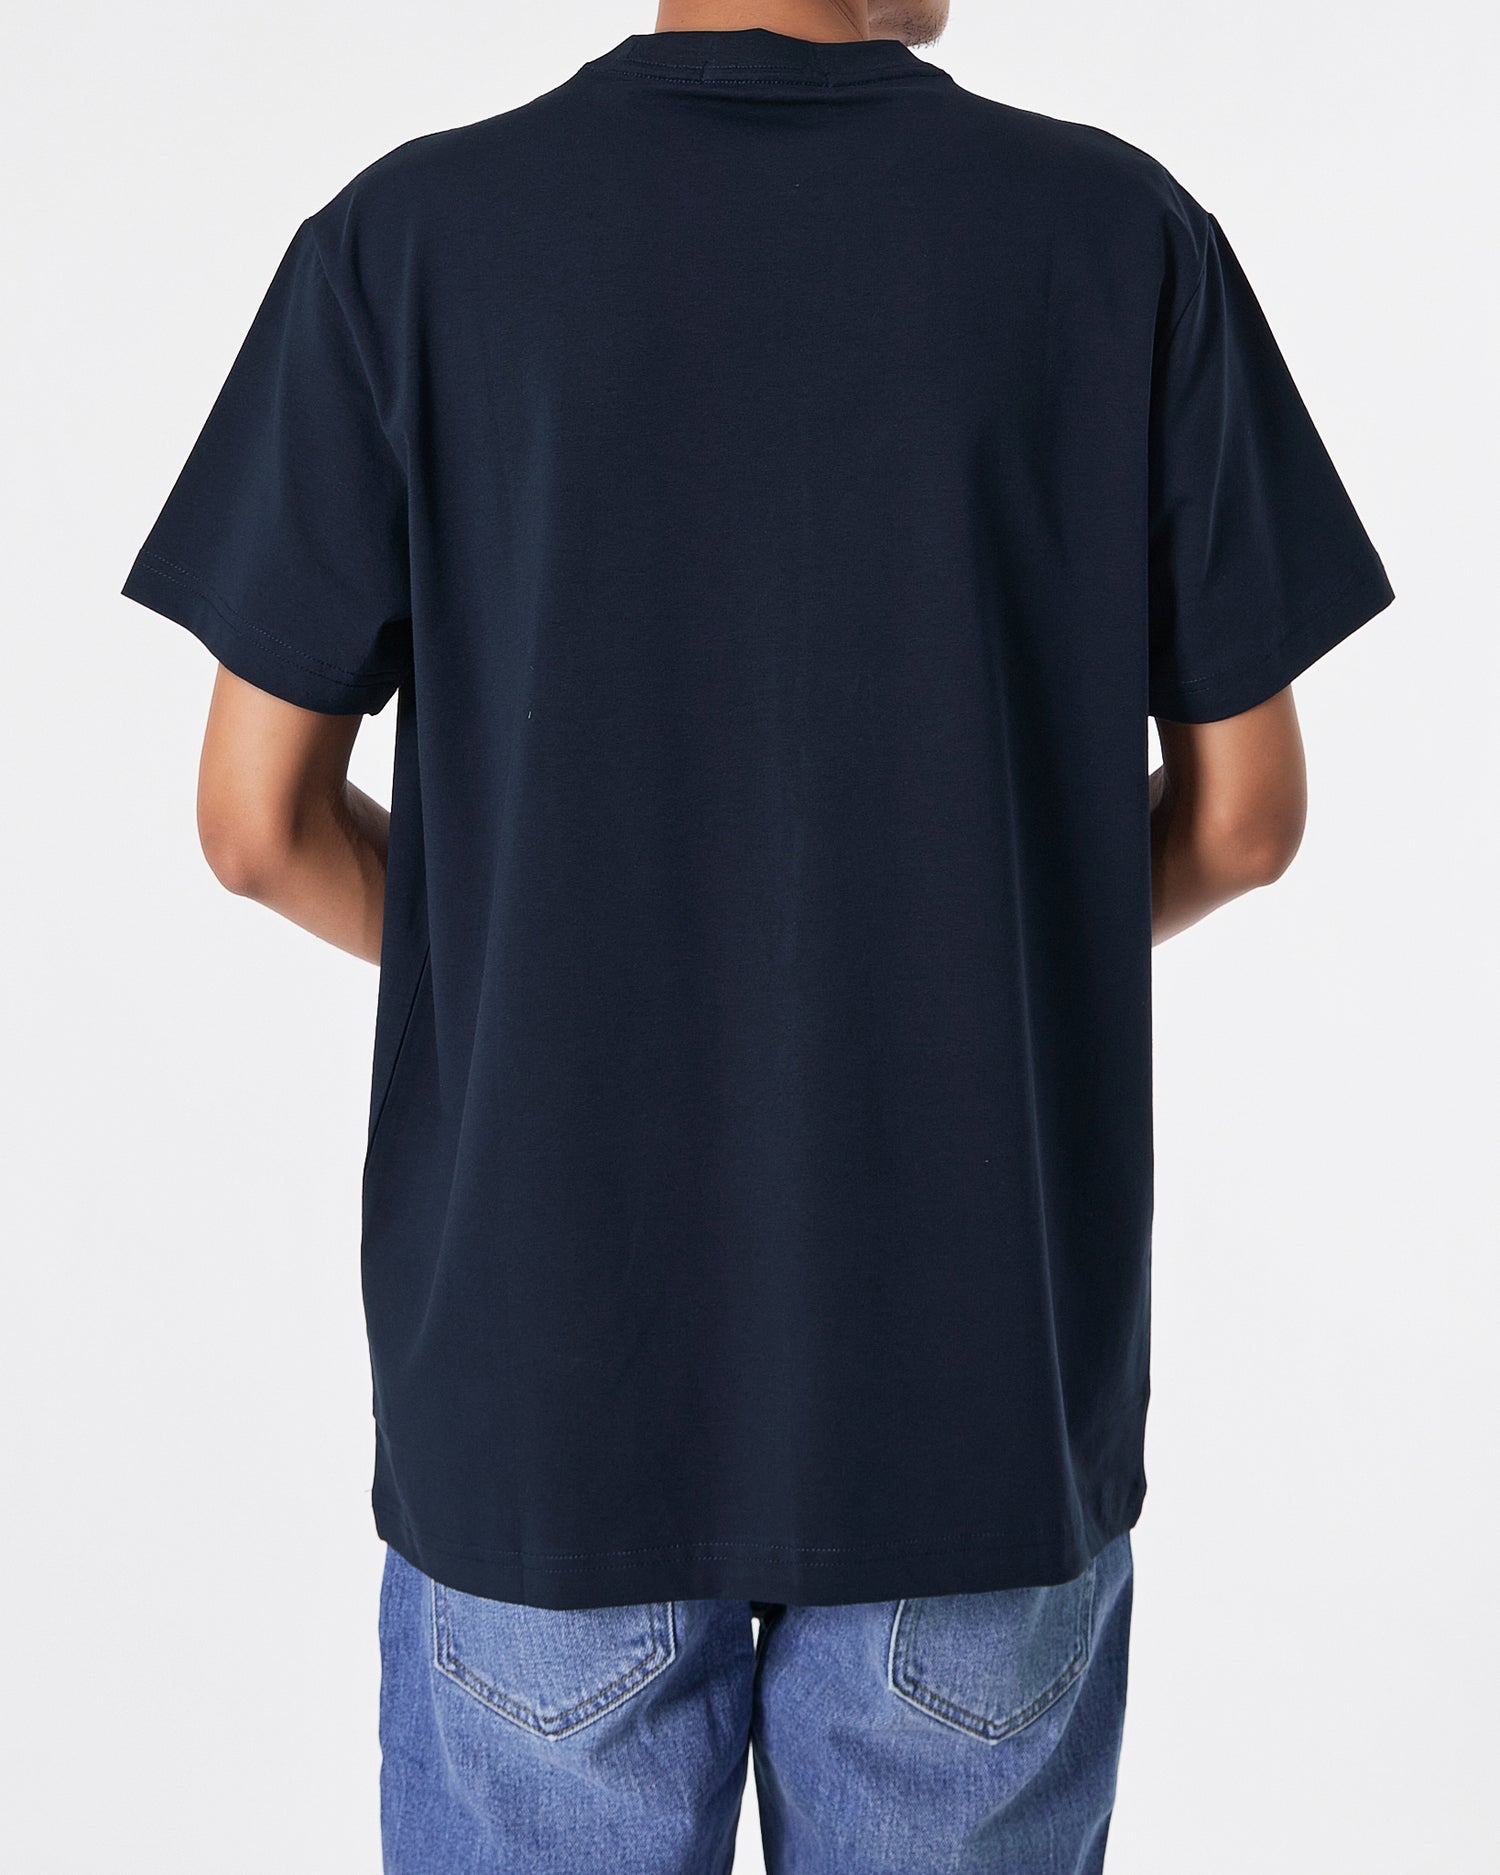 ARM Bird Printed Men Blue T-Shirt 17.90